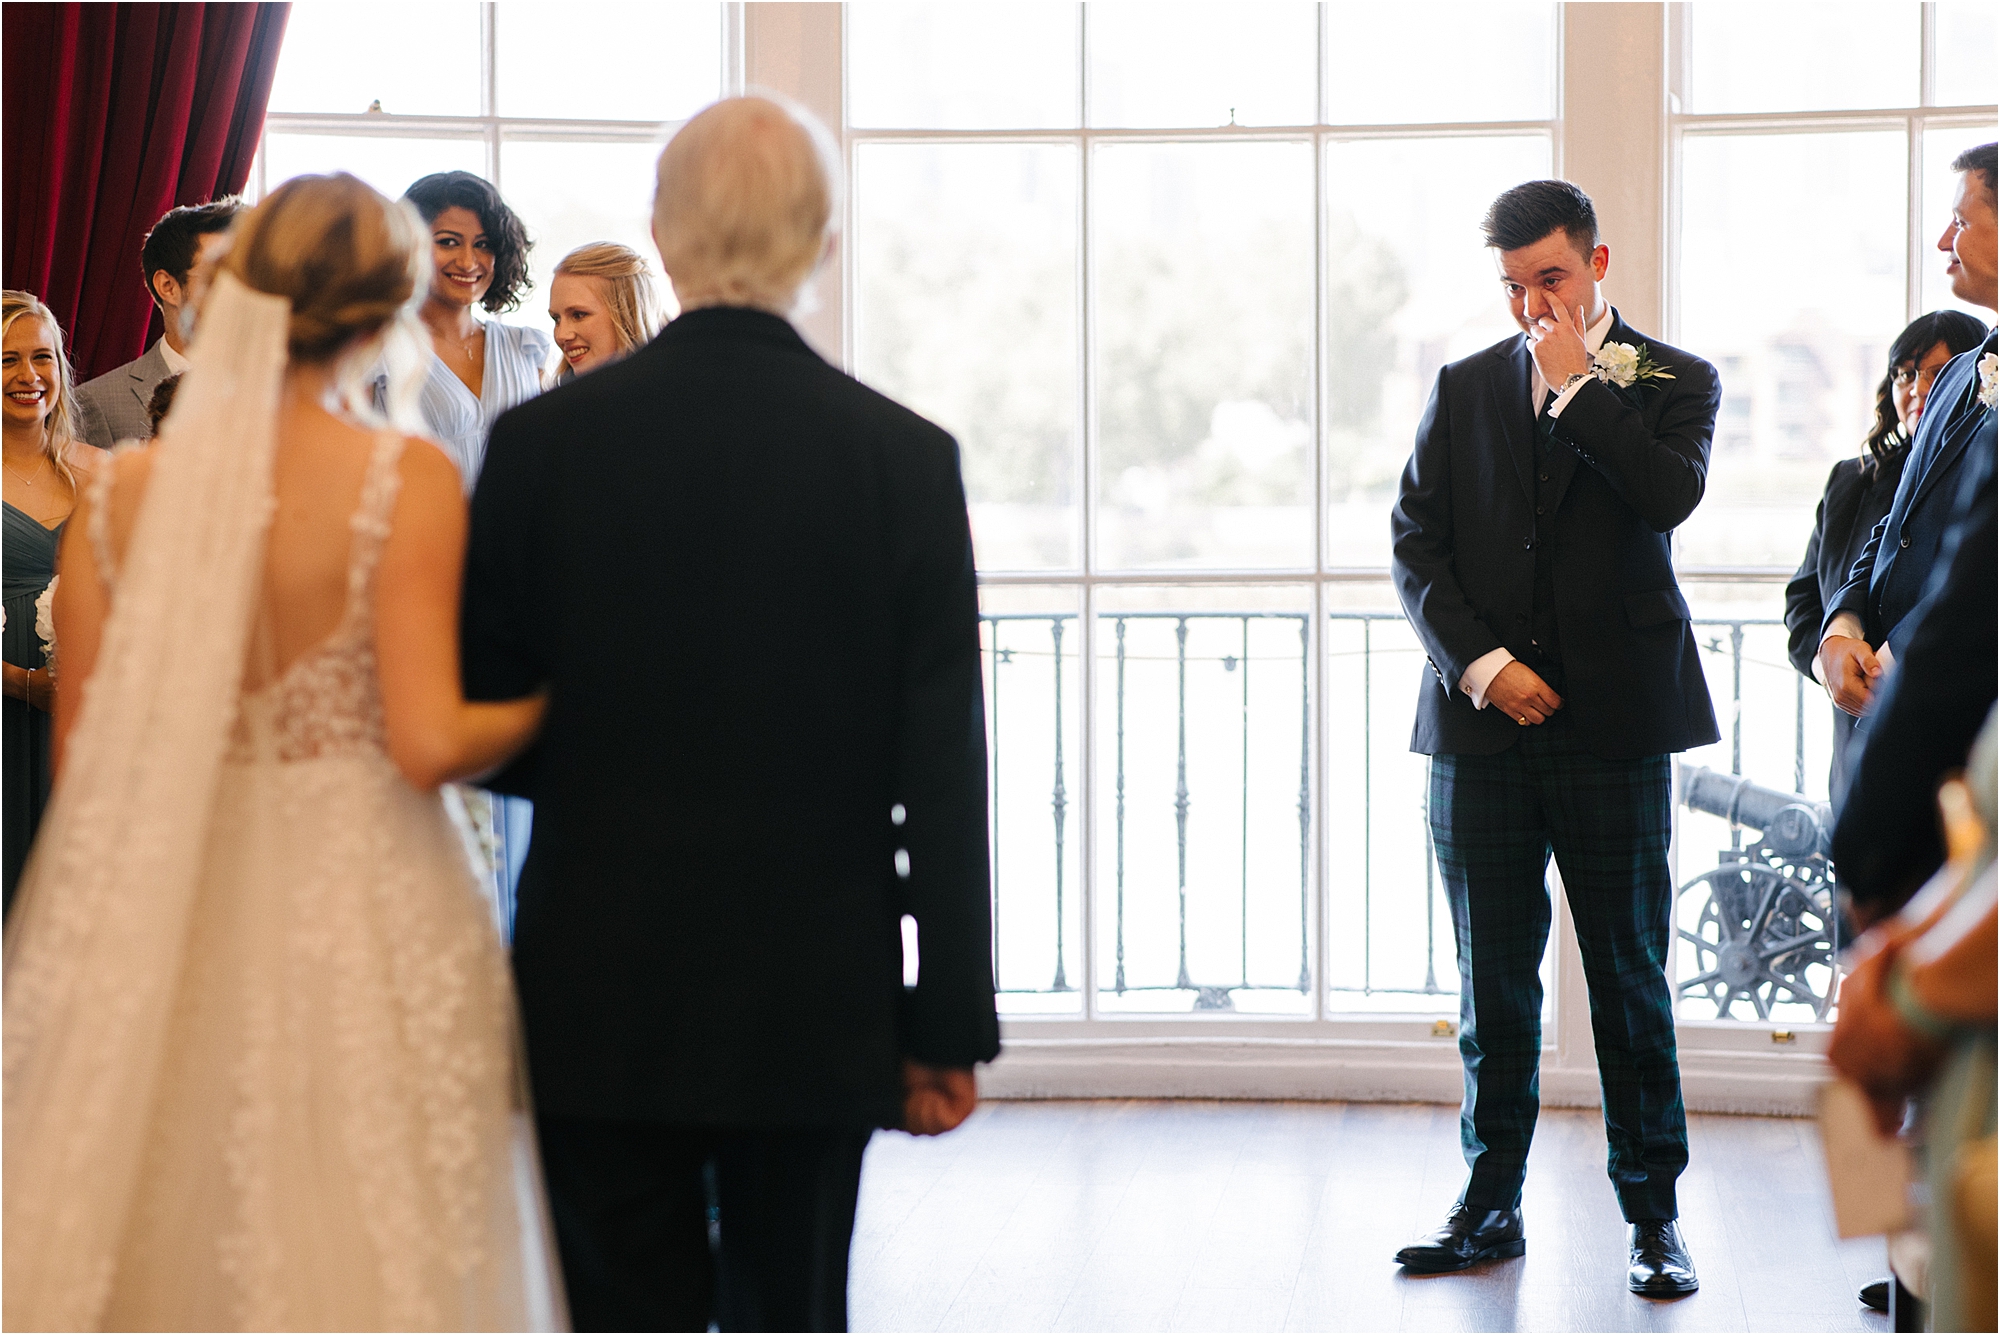 A groom reacting to his bride walking down the aisle at the Trafalgar Tavern Greenwich, London.